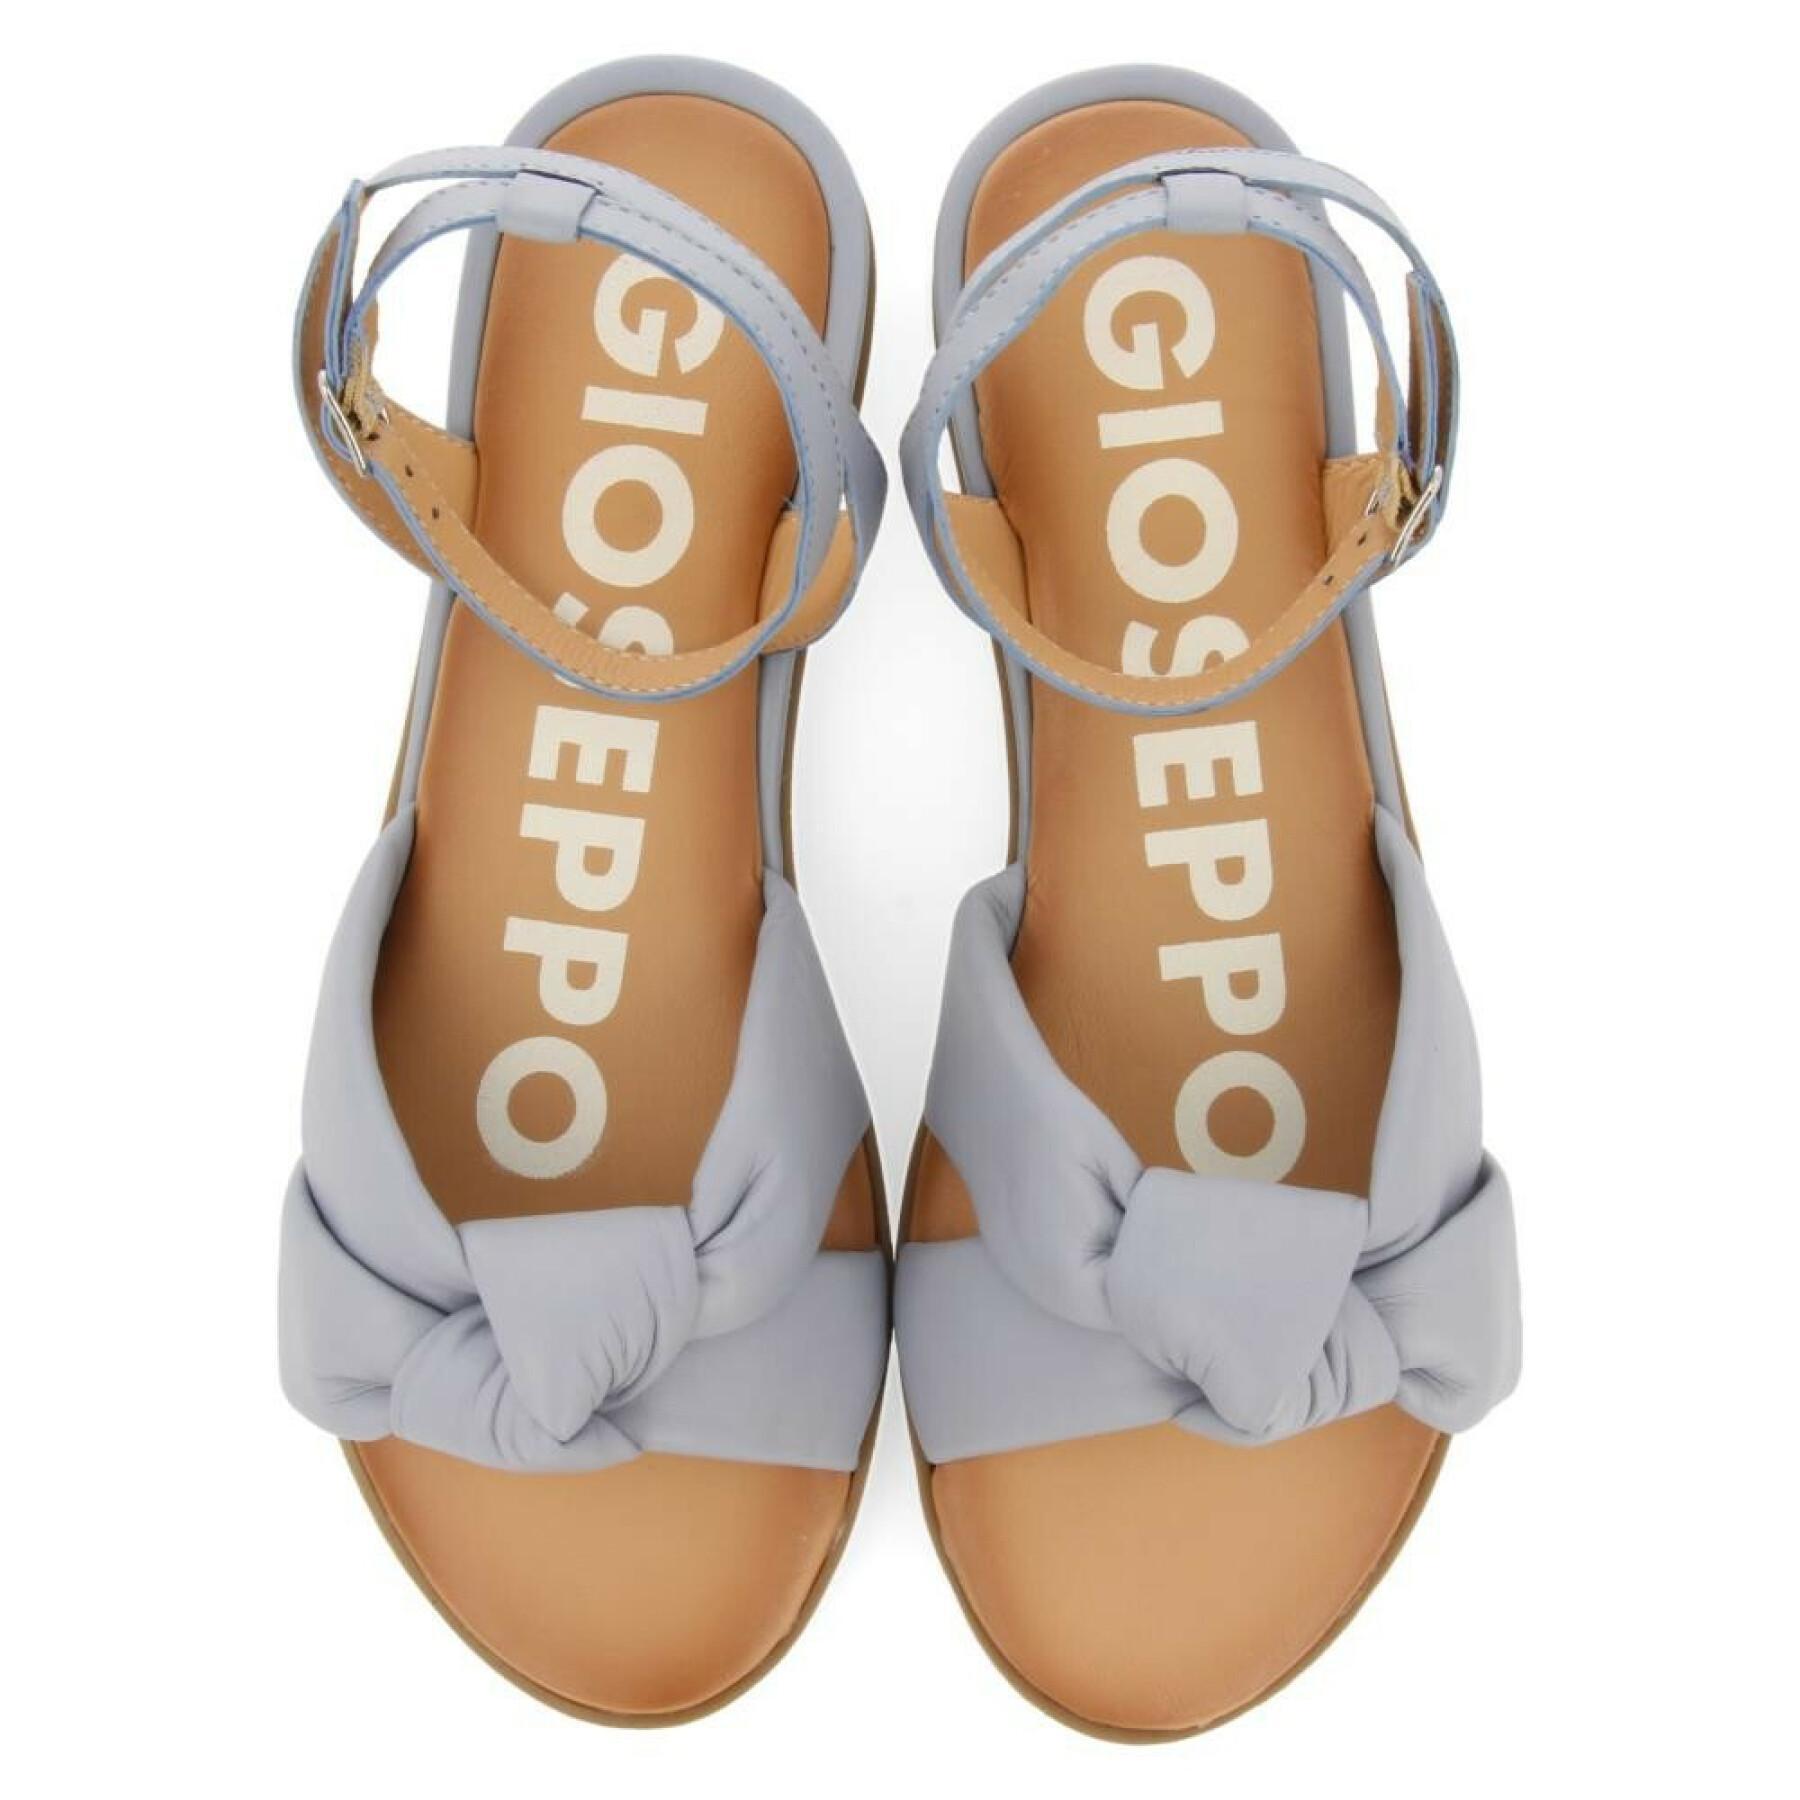 Sandales nu-pieds femme Gioseppo Egan